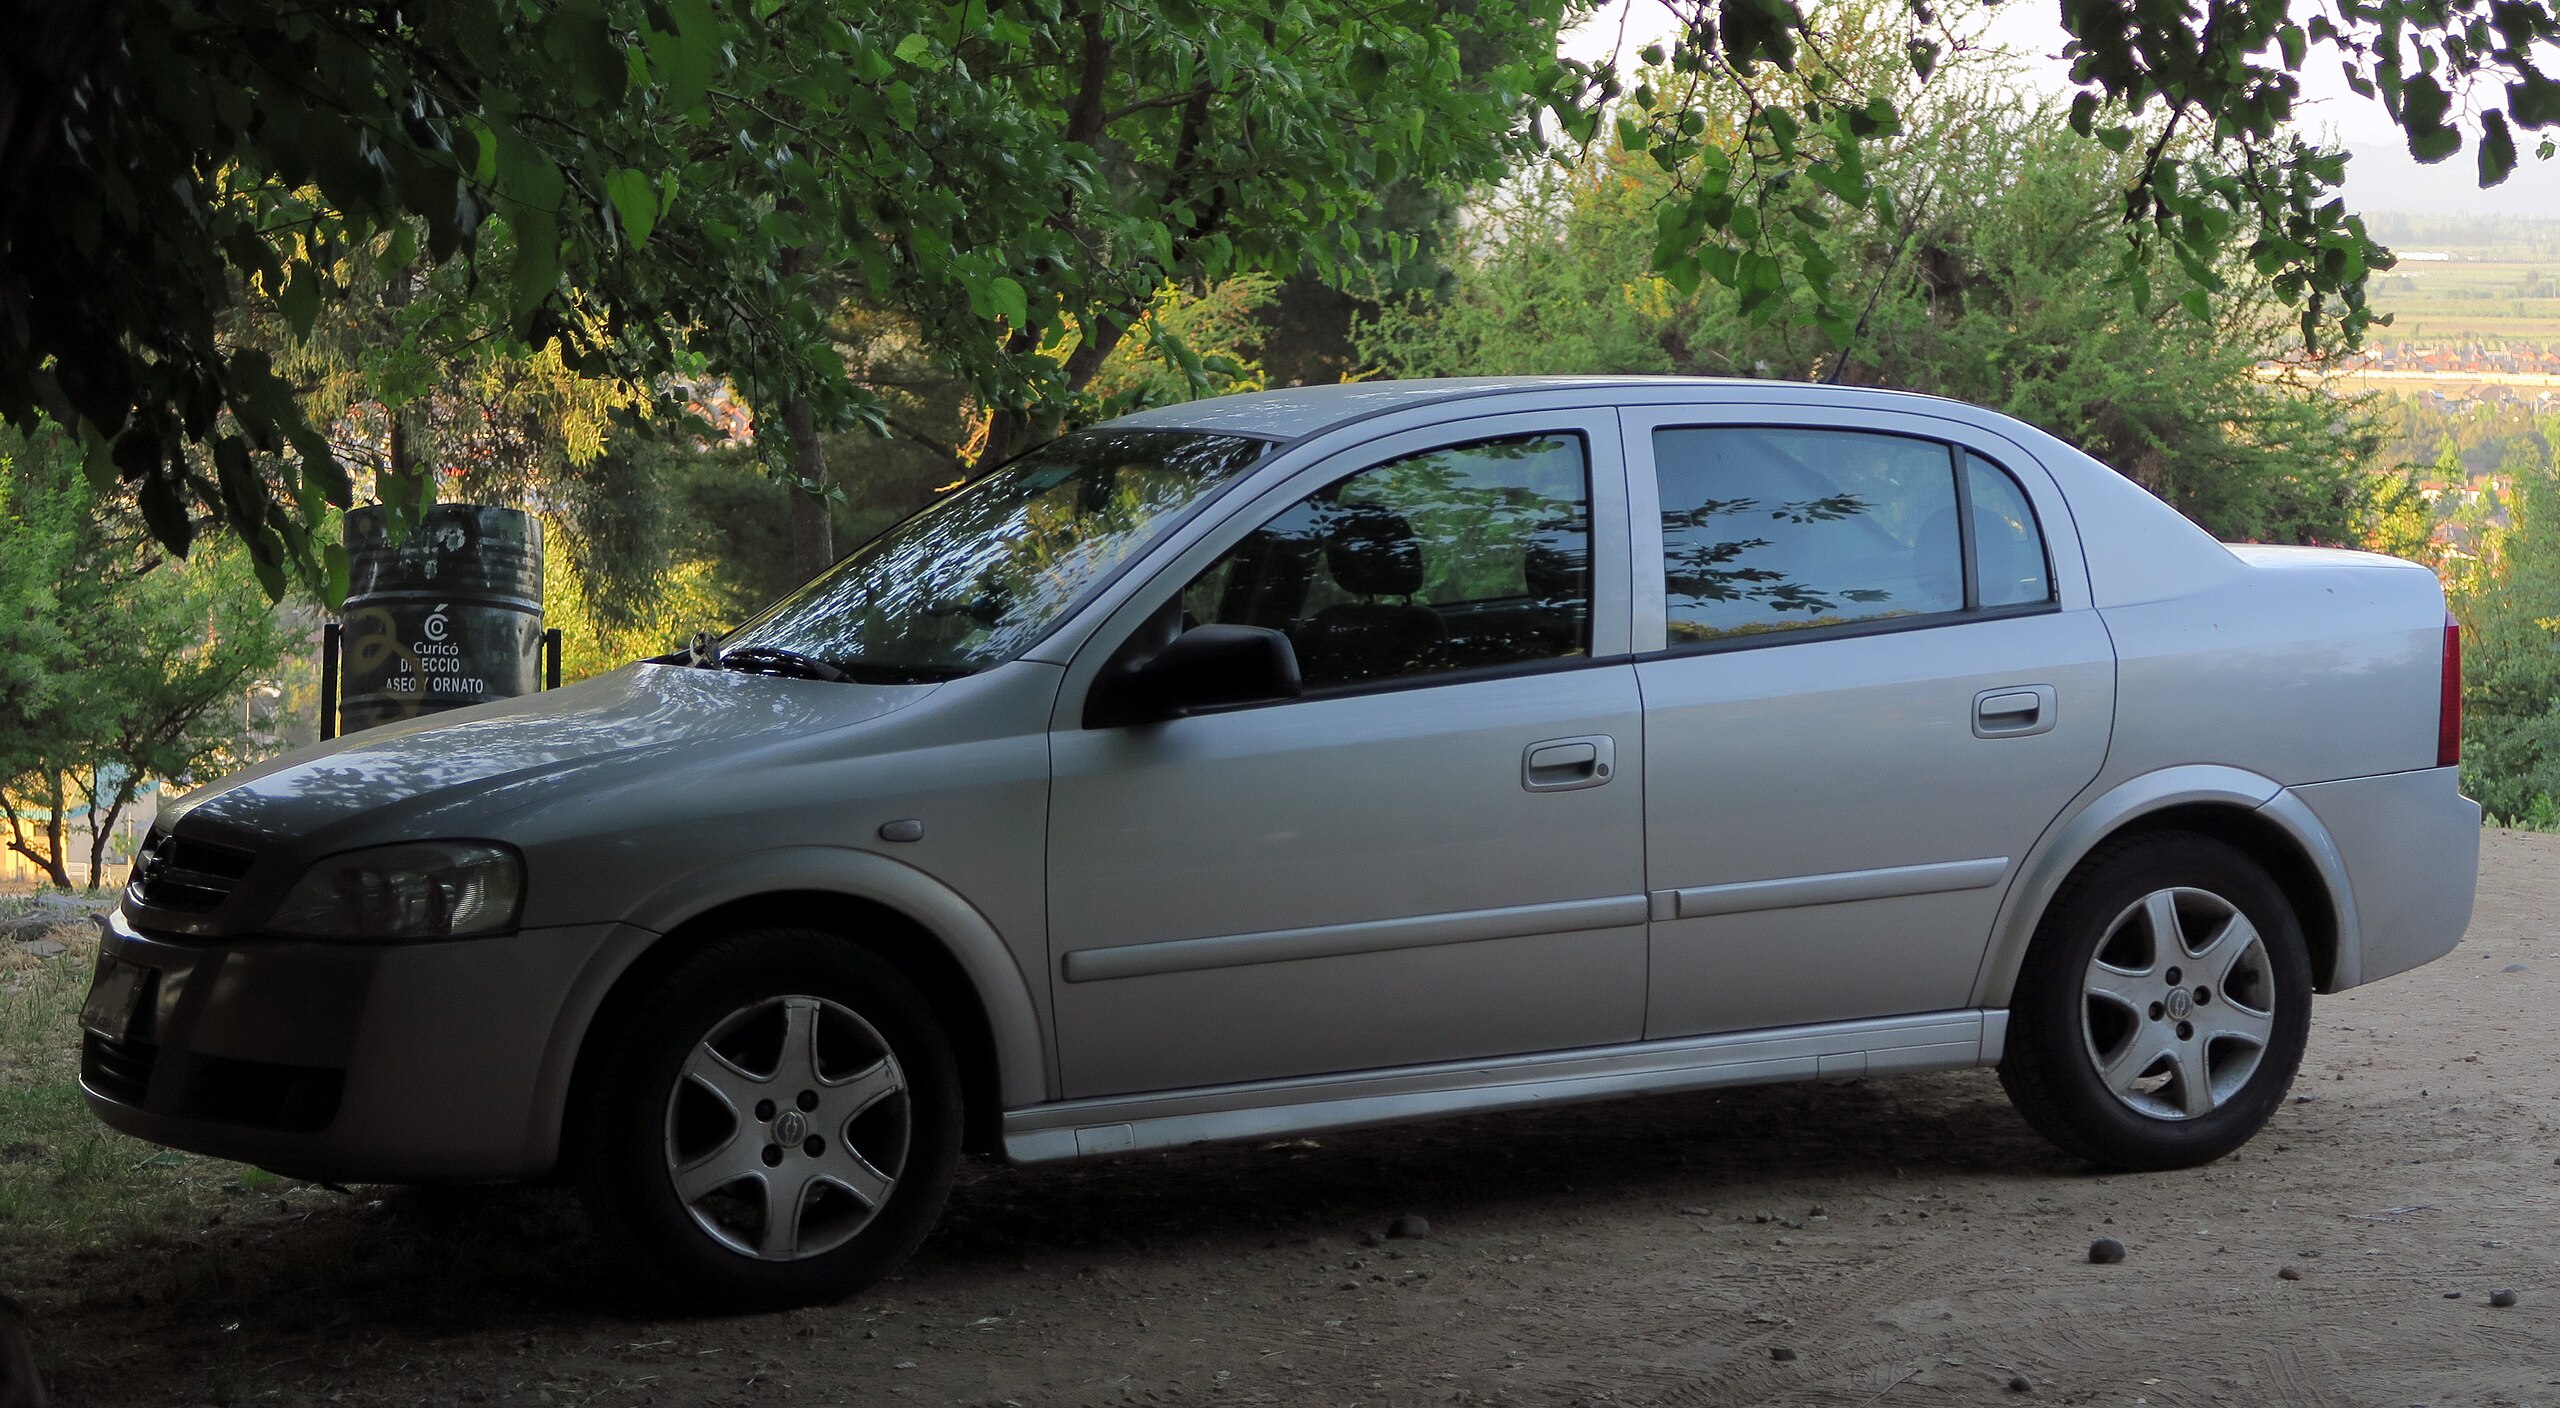 File:Chevrolet Astra 2.0 GLS 2006 (16088287360).jpg - Wikipedia